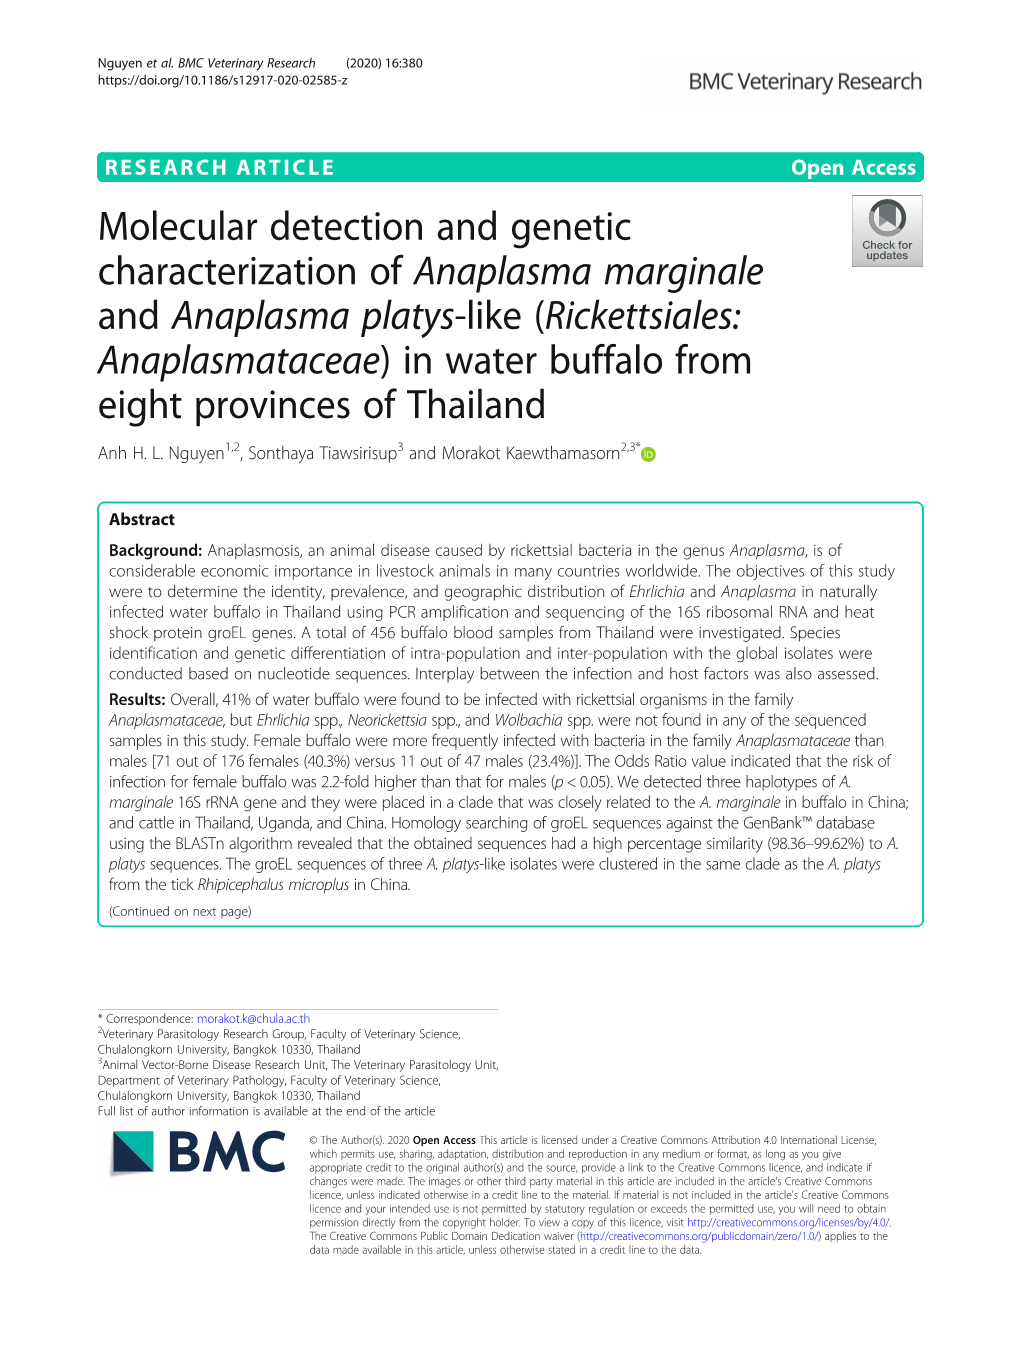 Molecular Detection and Genetic Characterization of Anaplasma Marginale and Anaplasma Platys-Like (Rickettsiales: Anaplasmatacea